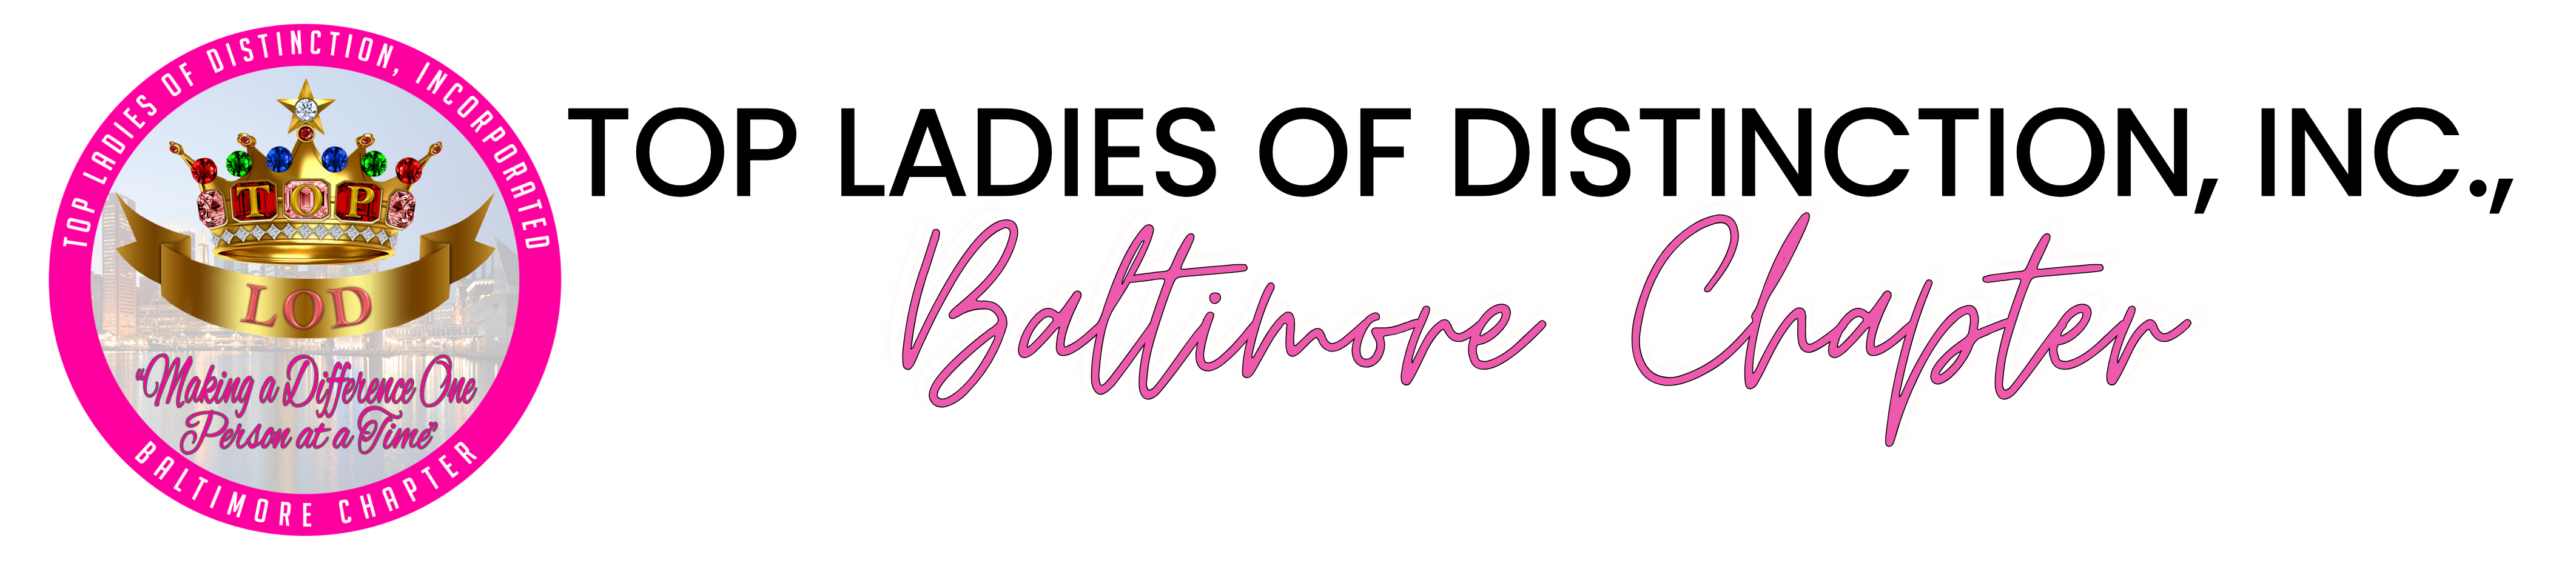 Top Ladies of Distinction, Inc. – Baltimore Chapter